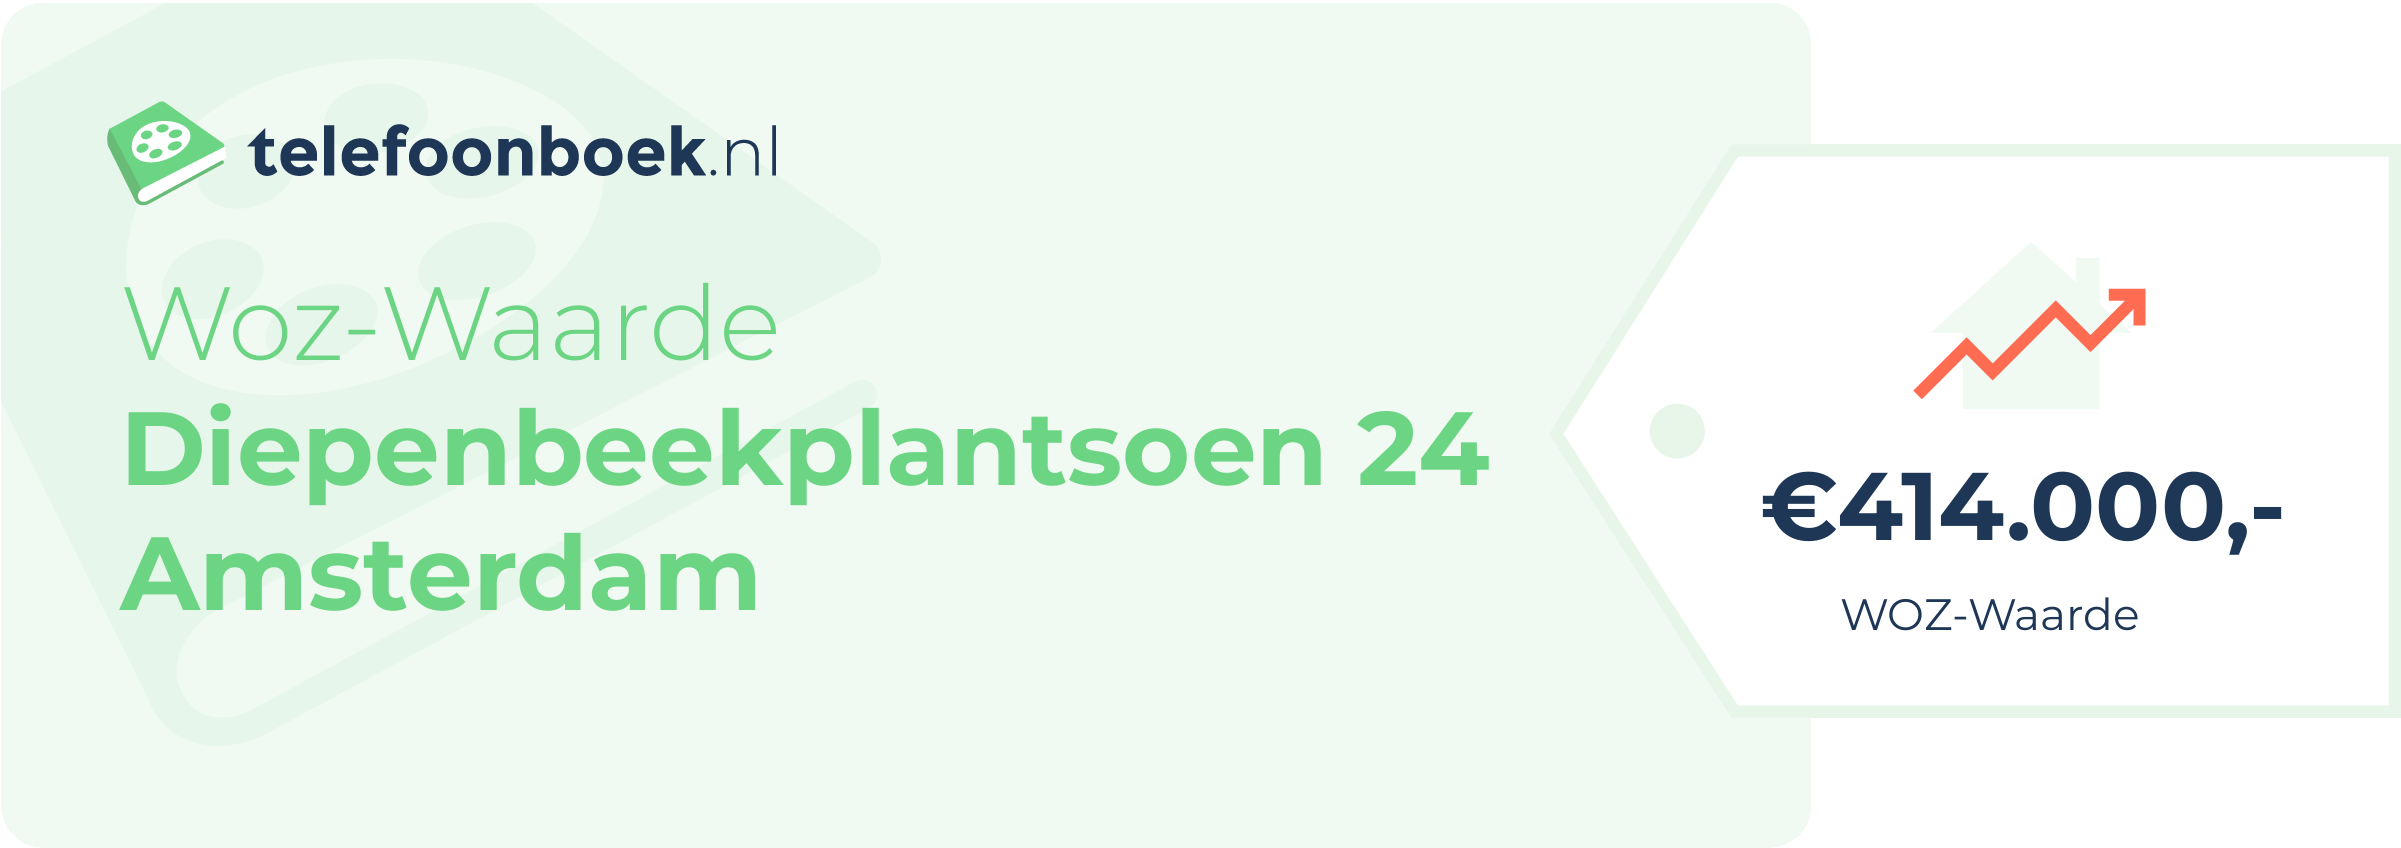 WOZ-waarde Diepenbeekplantsoen 24 Amsterdam